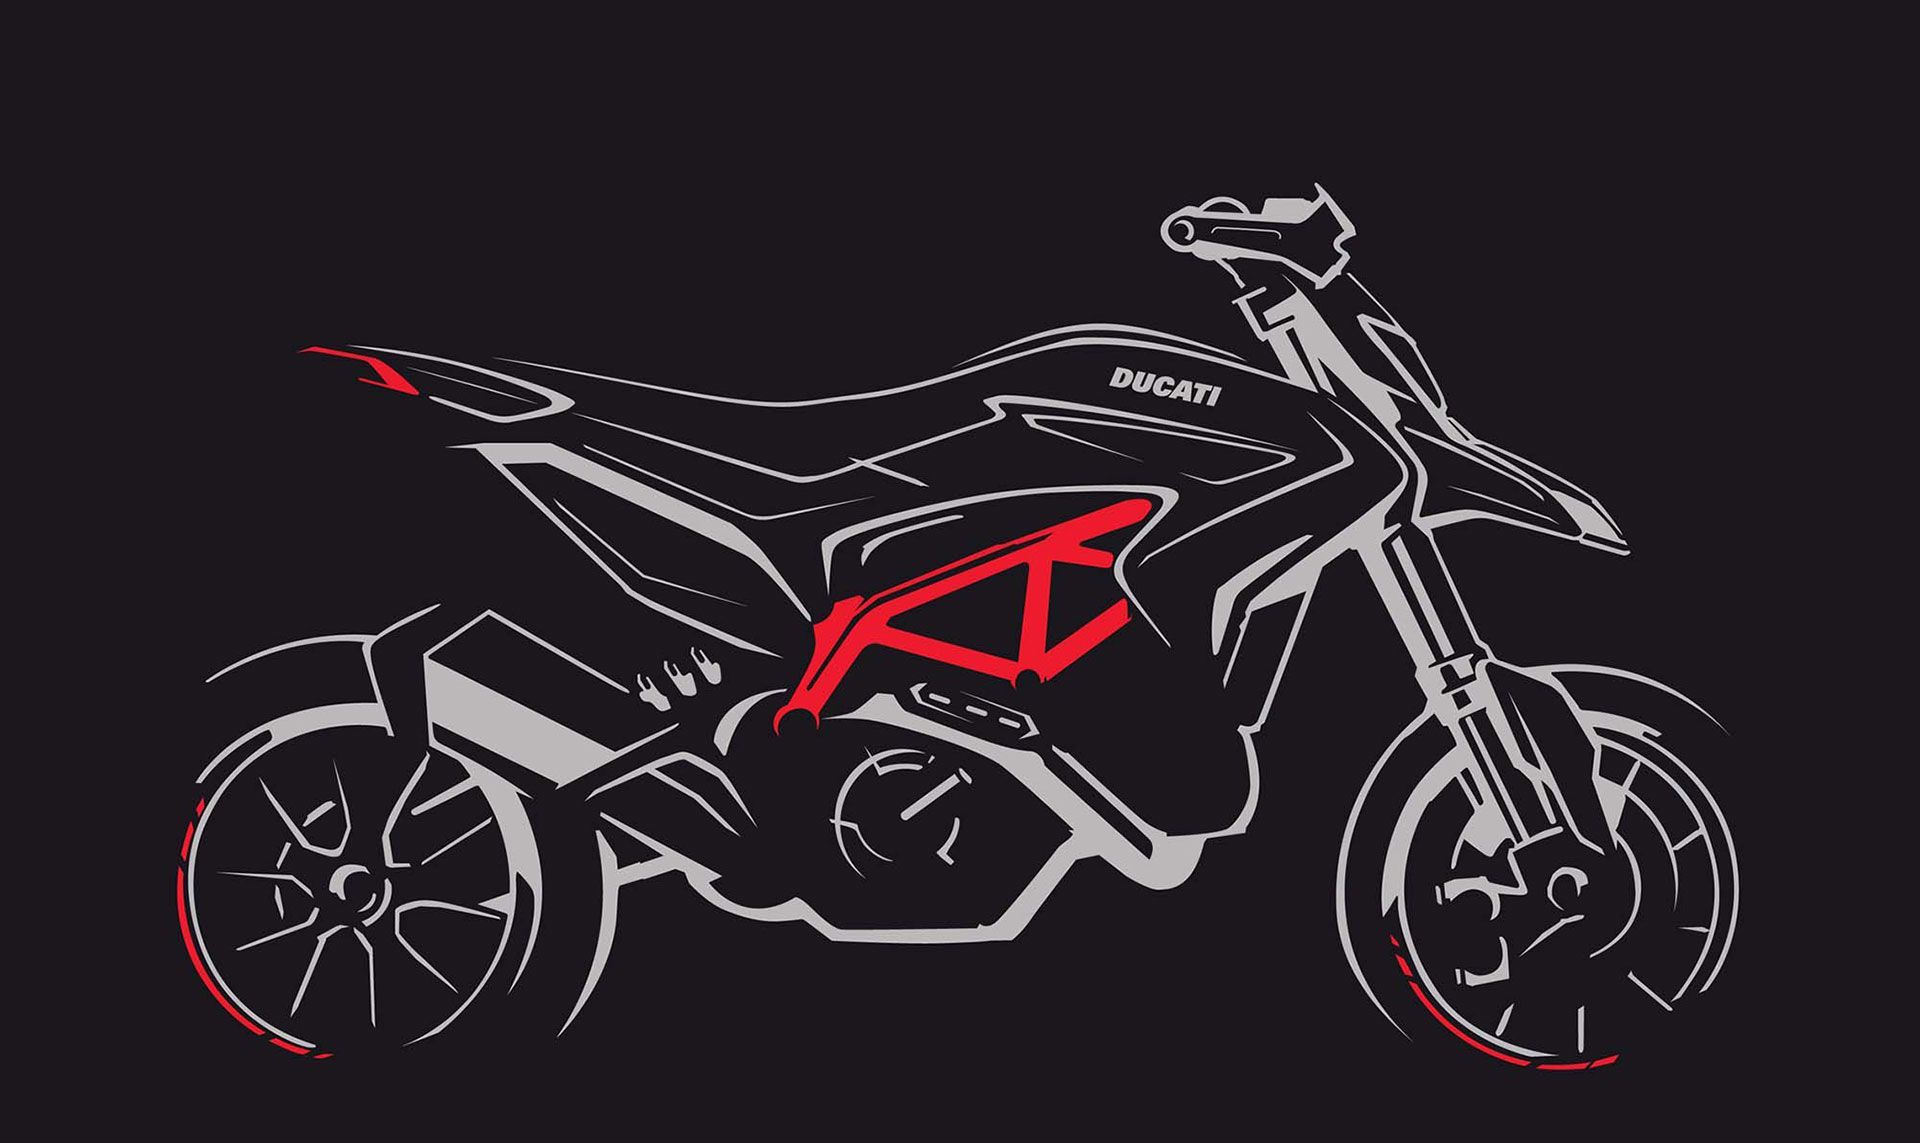 Ducati Hypermotard Design Picture. Disegni, Motociclette, Tela